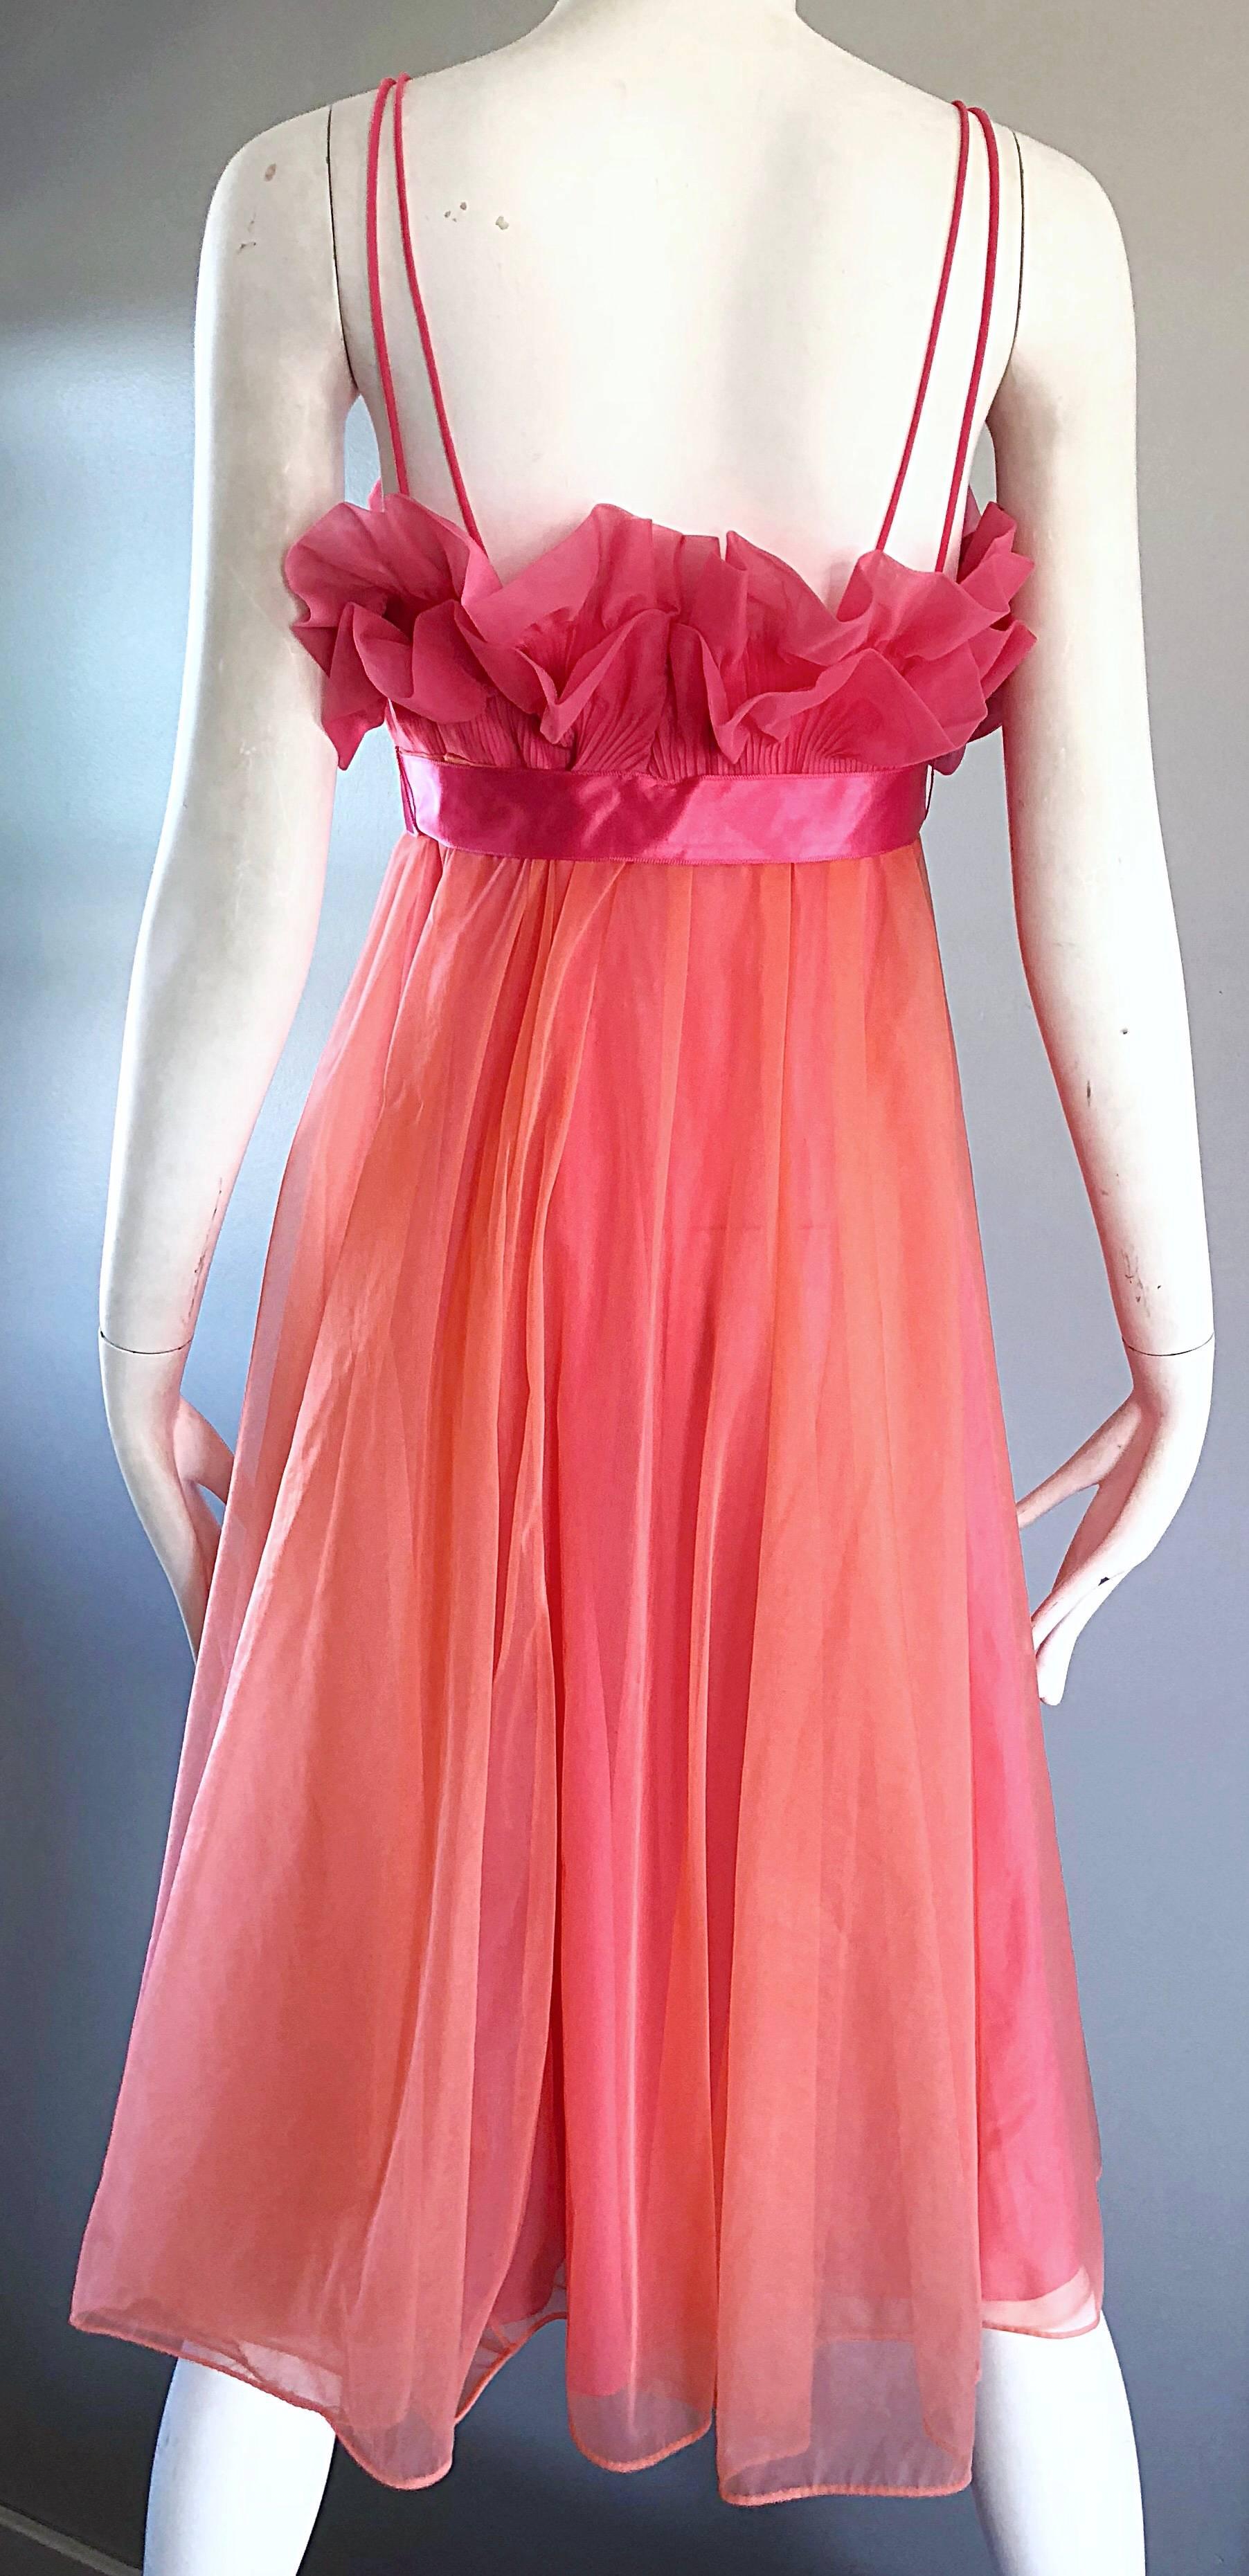 1960s Vanity Fair Negligee Peignoir Hot Pink Ruffled Nightgown Dress 2